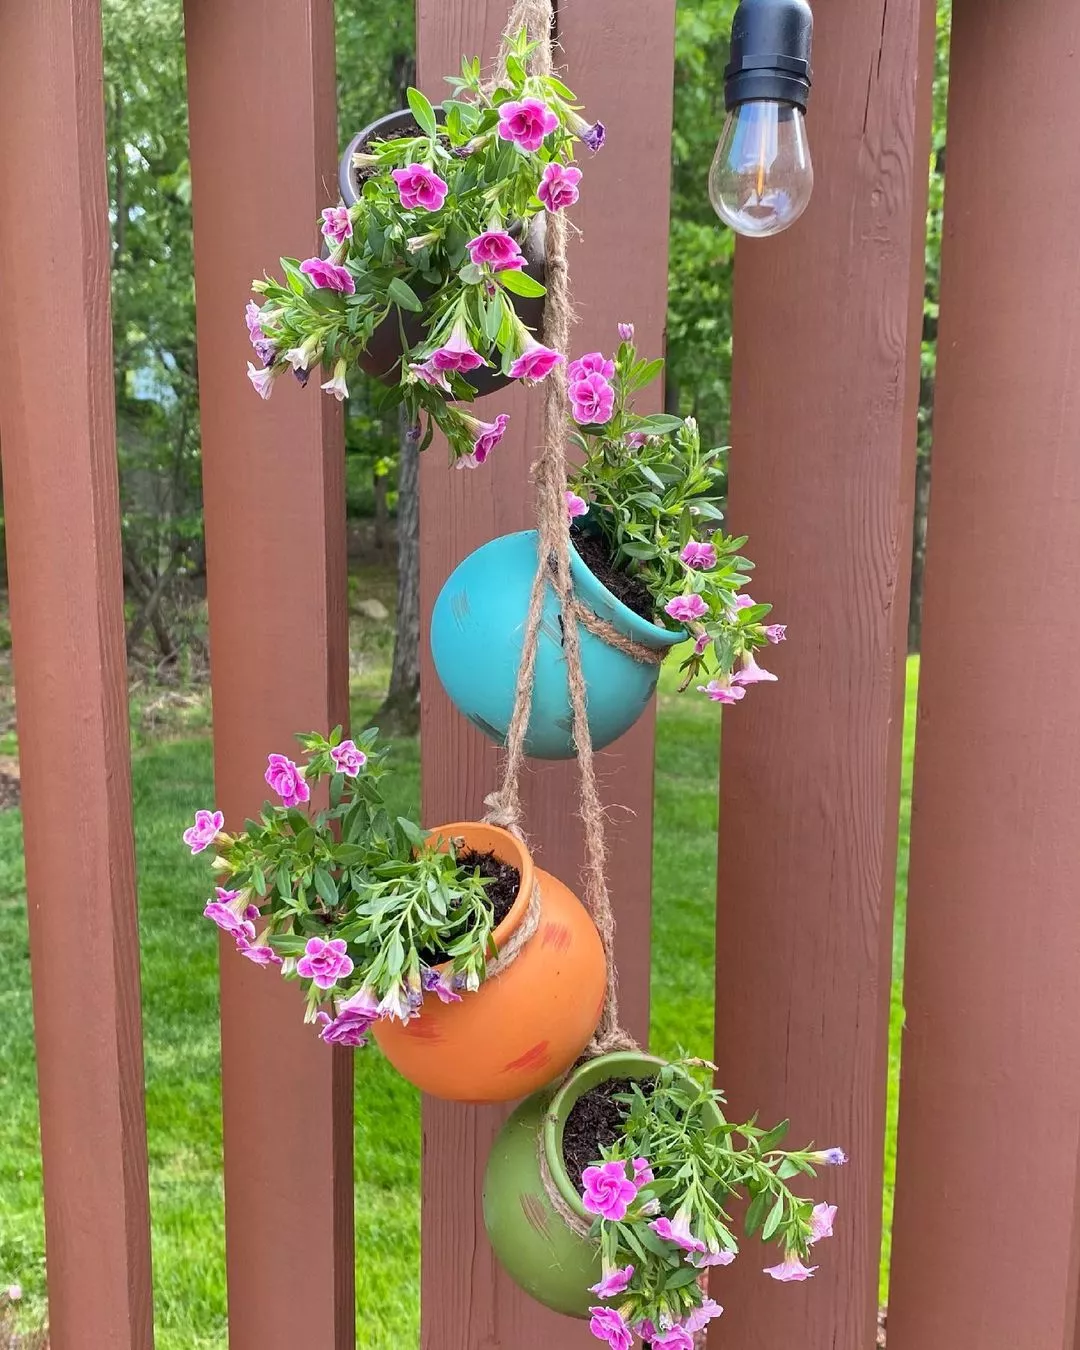 https://www.extraspace.com/blog/wp-content/uploads/2021/07/Easy-Gardening-Ideas-Utilize-Hanging-Baskets.jpeg.webp